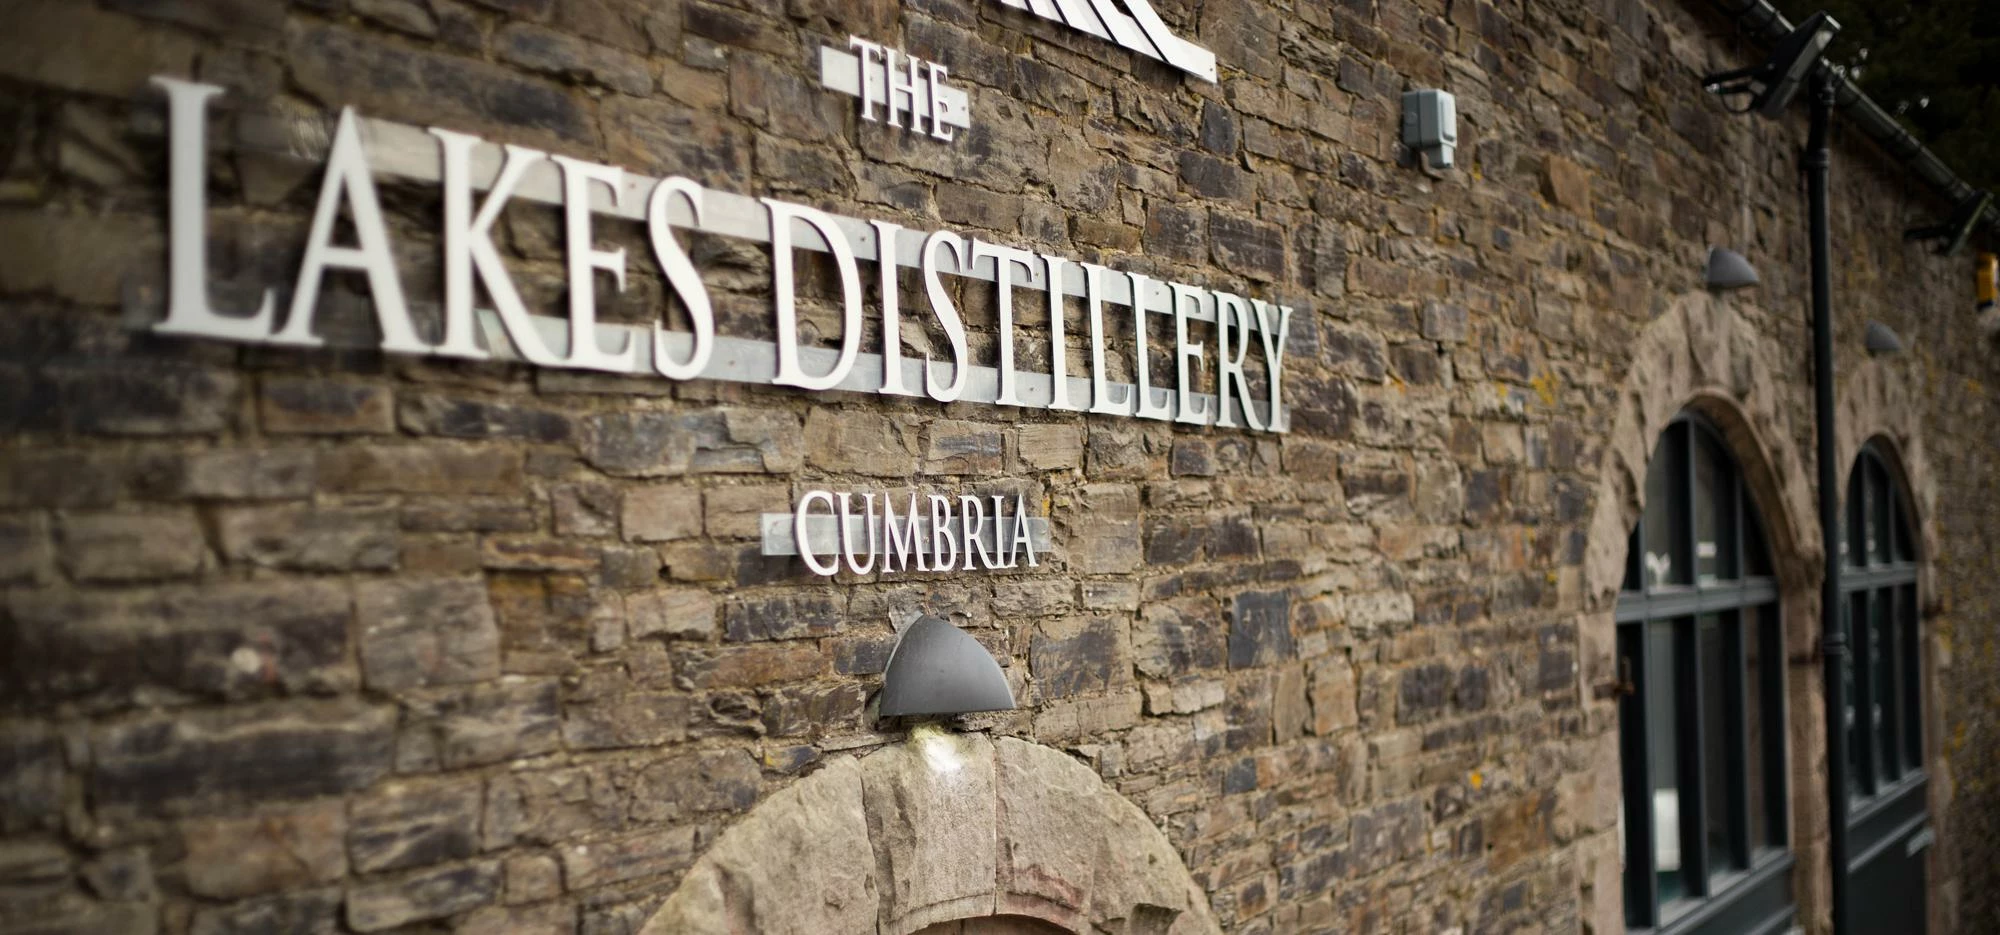 The Lakes Distillery wins global award for distillery facilities 